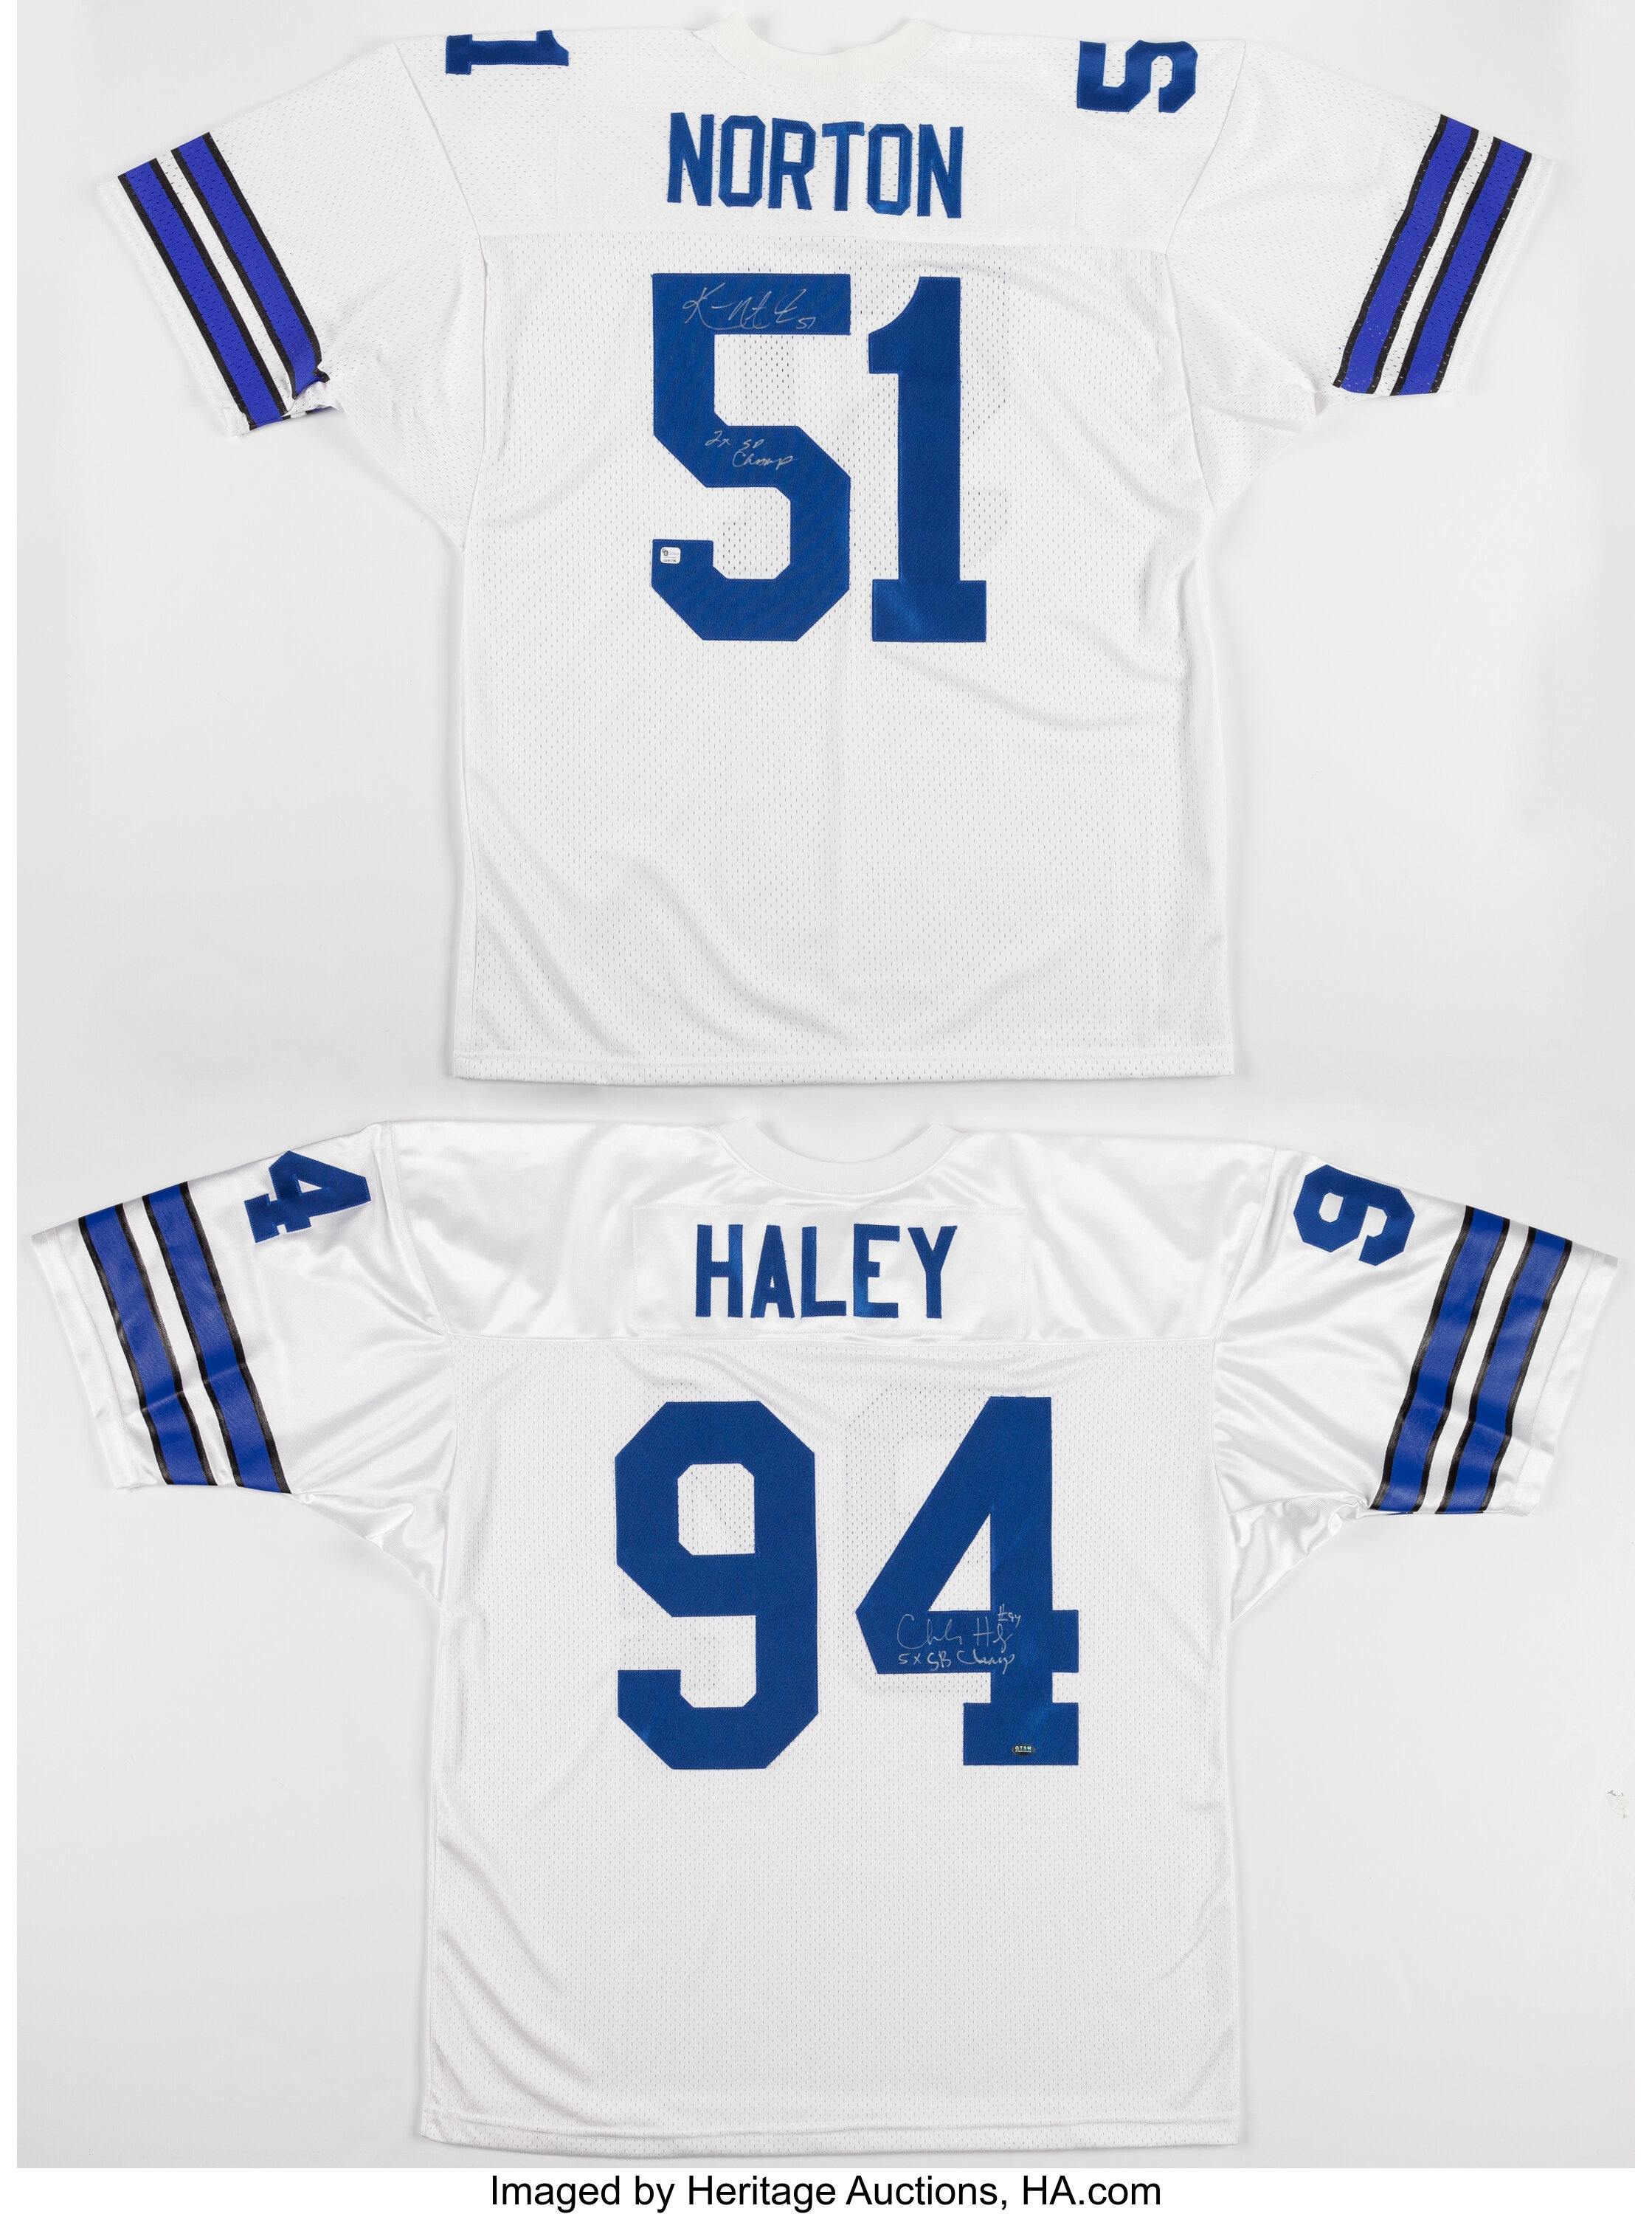 Ken Norton Jr. and Charles Haley Signed Dallas Cowboys Jerseys, Lot #42183